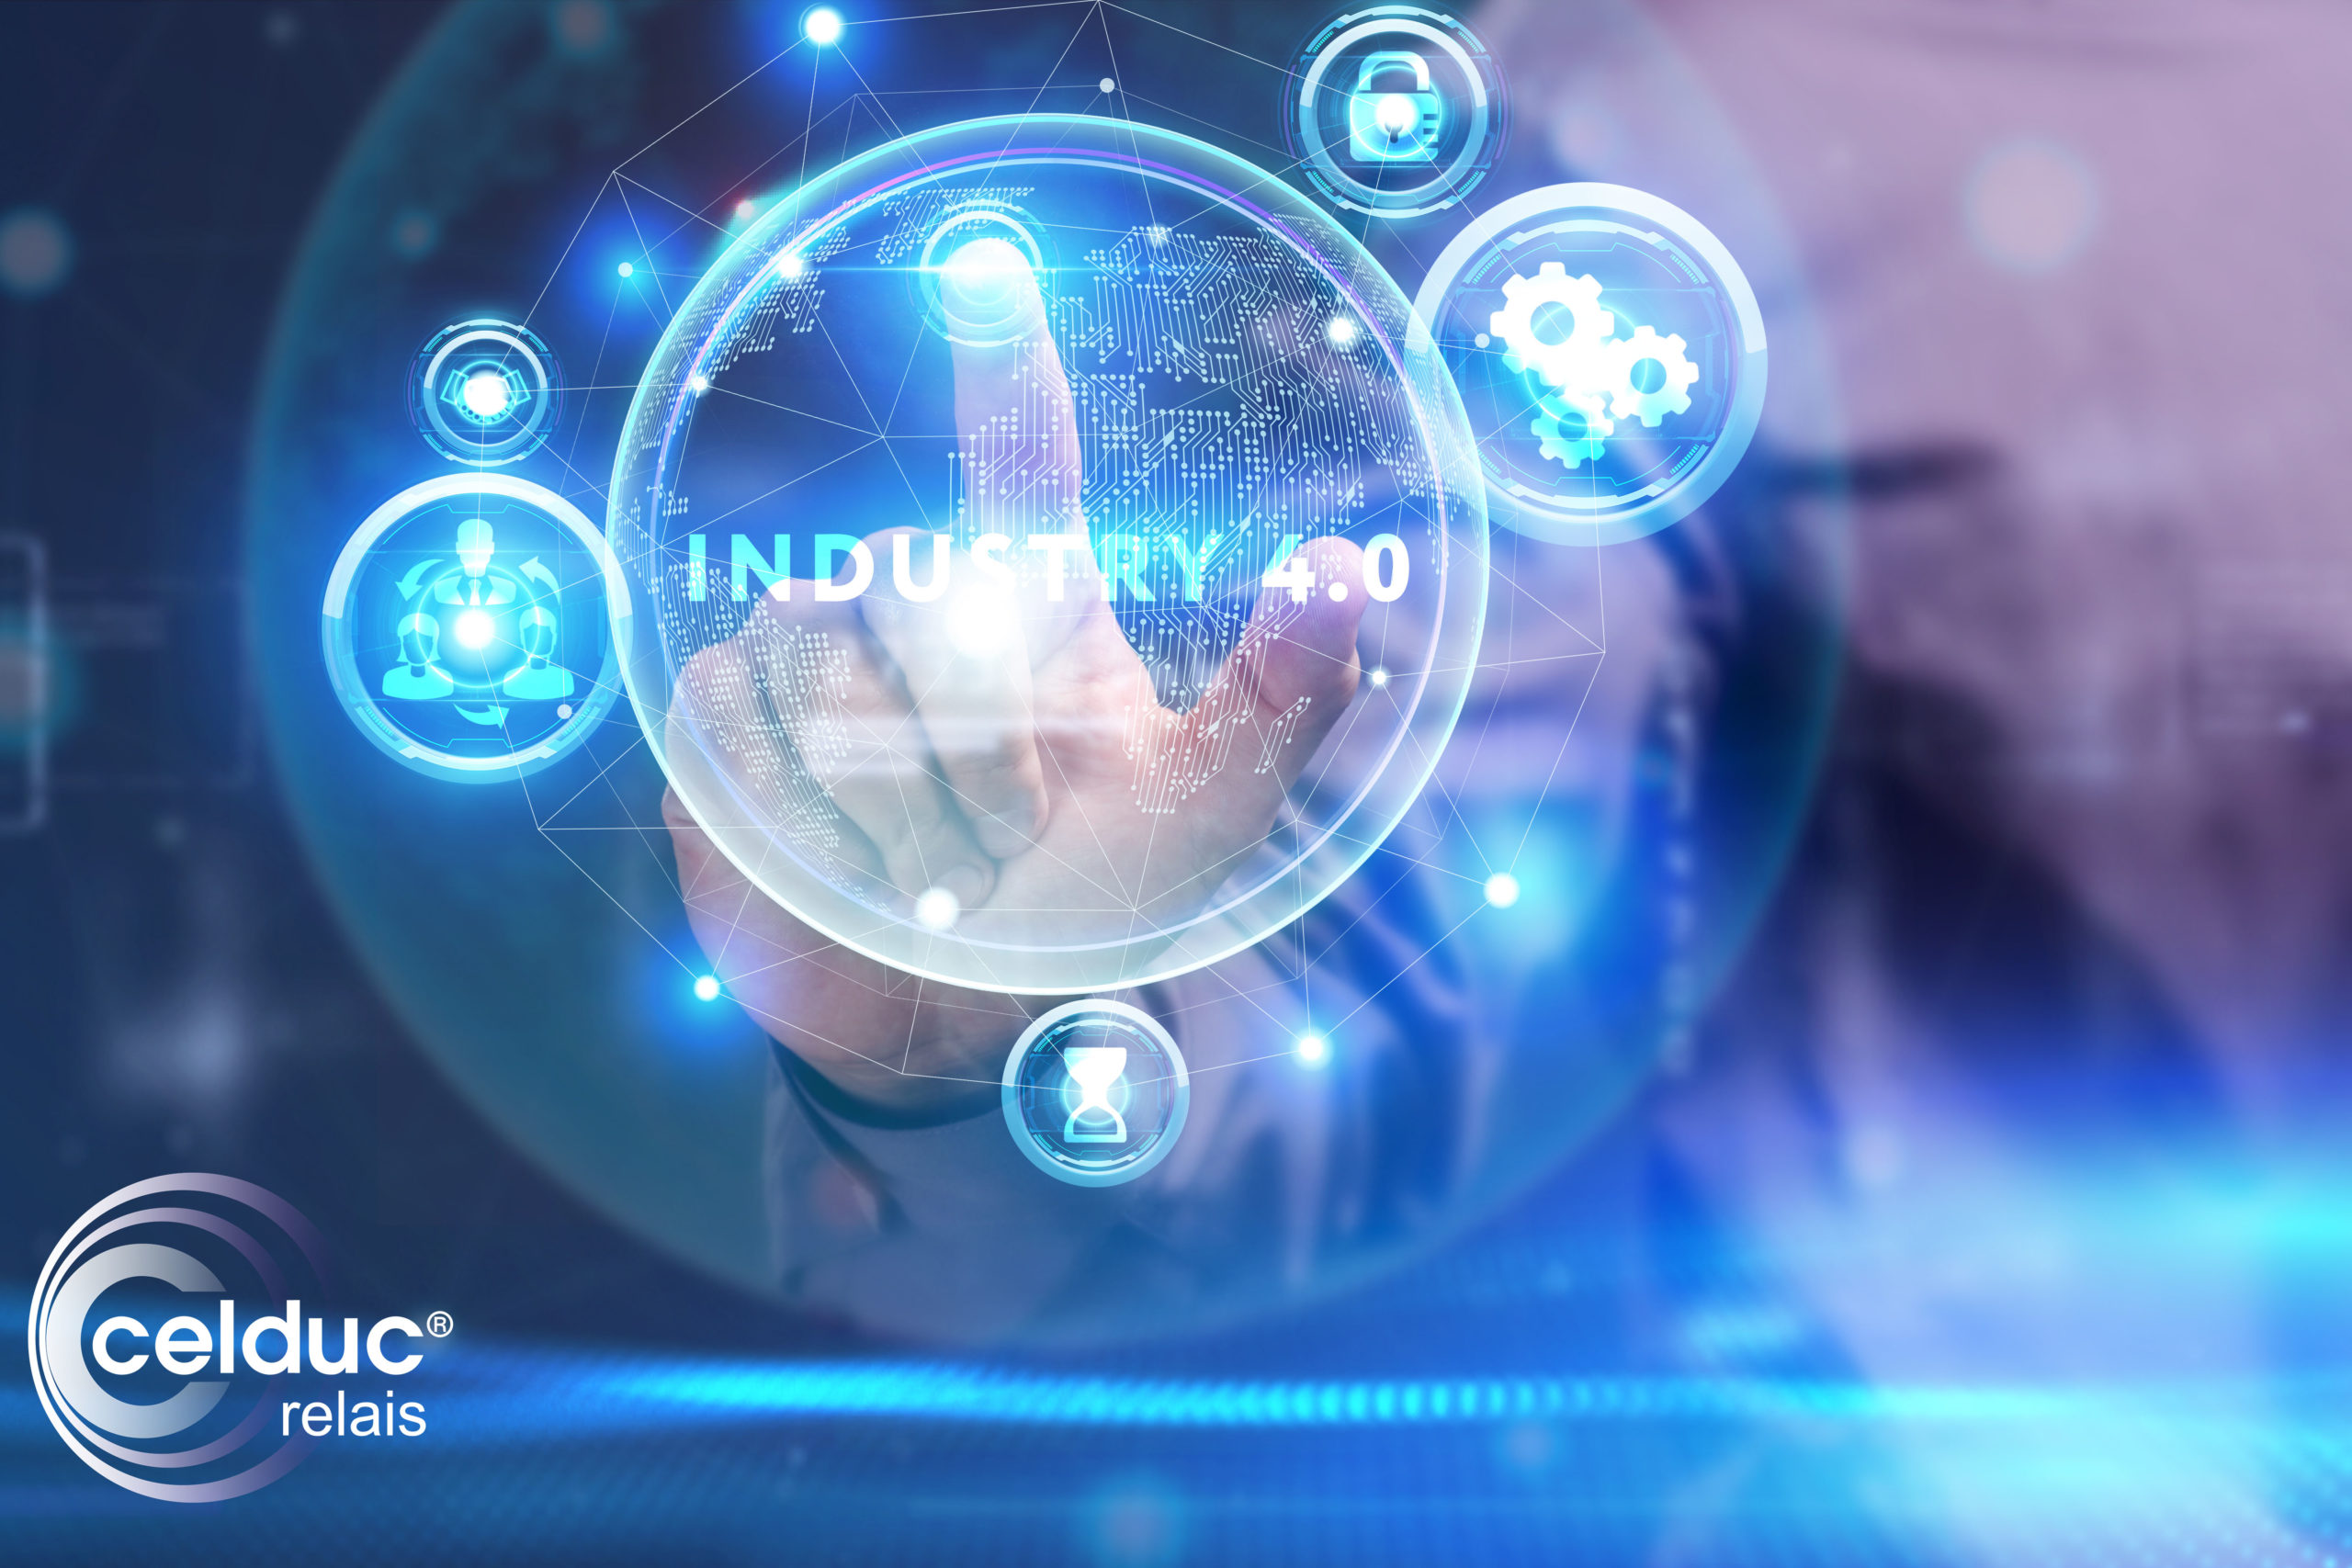 industry 4.0 with celduc